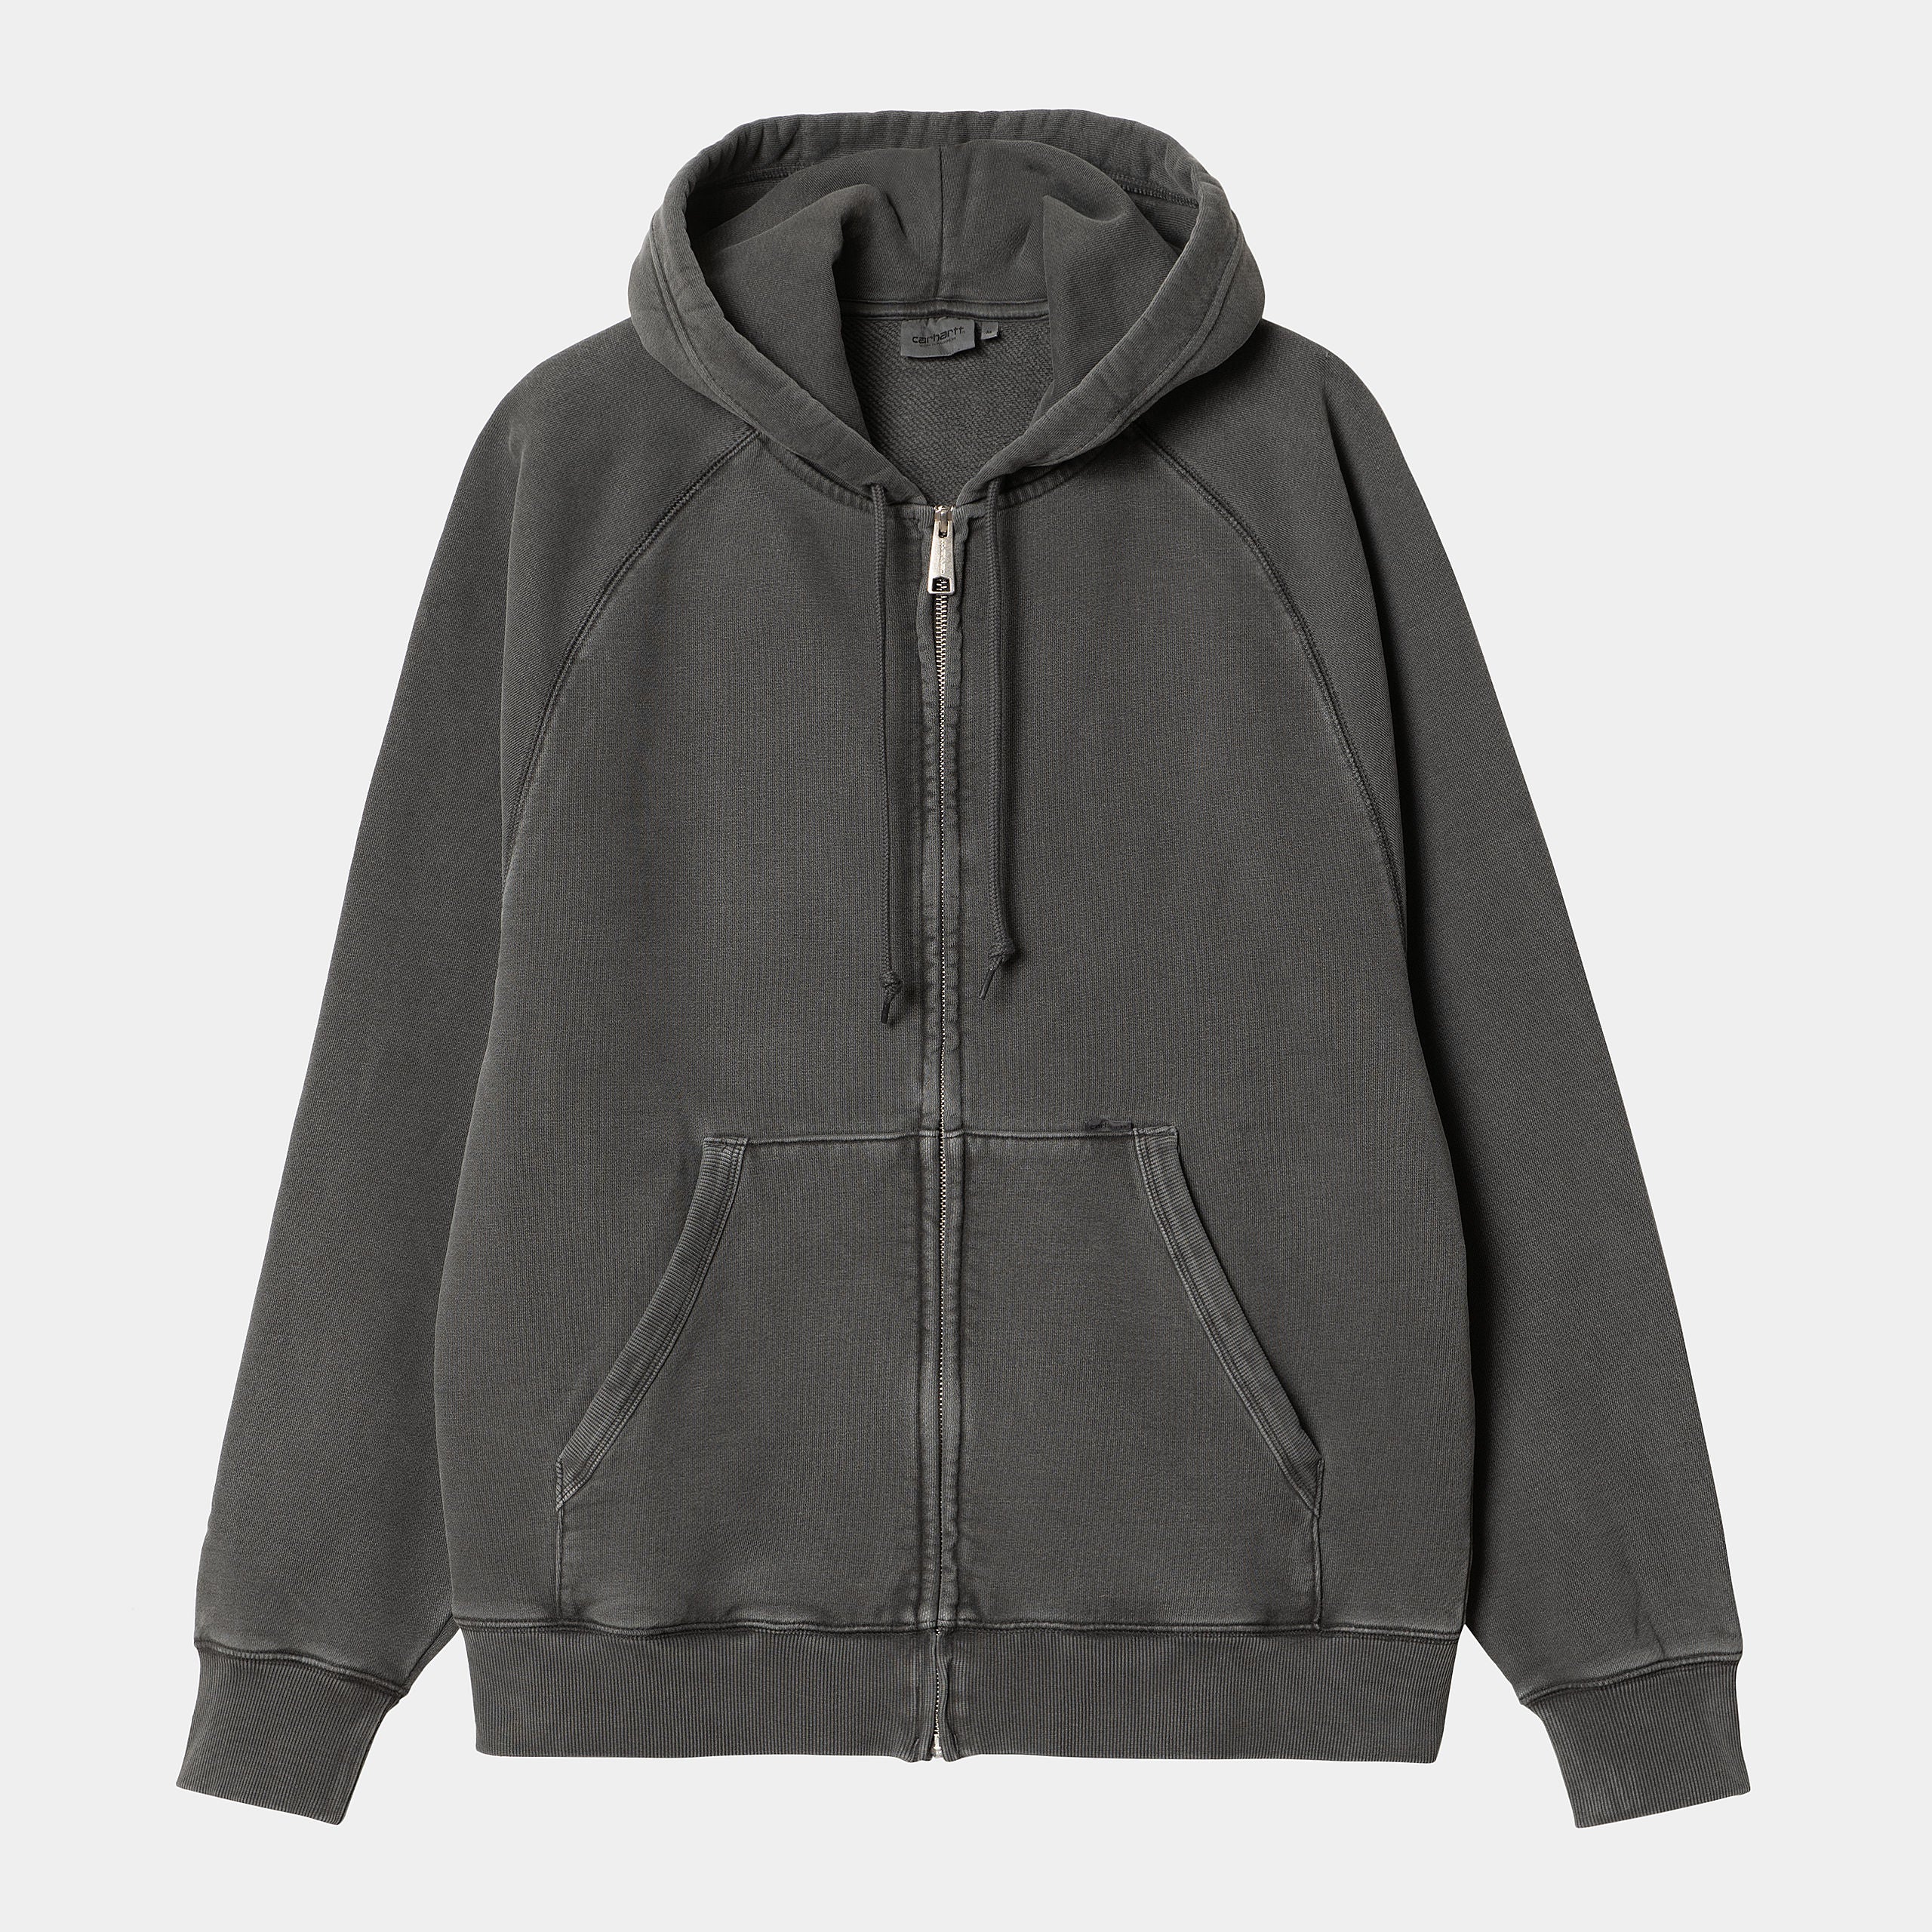 Men's Carhartt Wip Hooded Taos Jacket Cotton Sweat, 480 G/m² Flint Garment Dyed